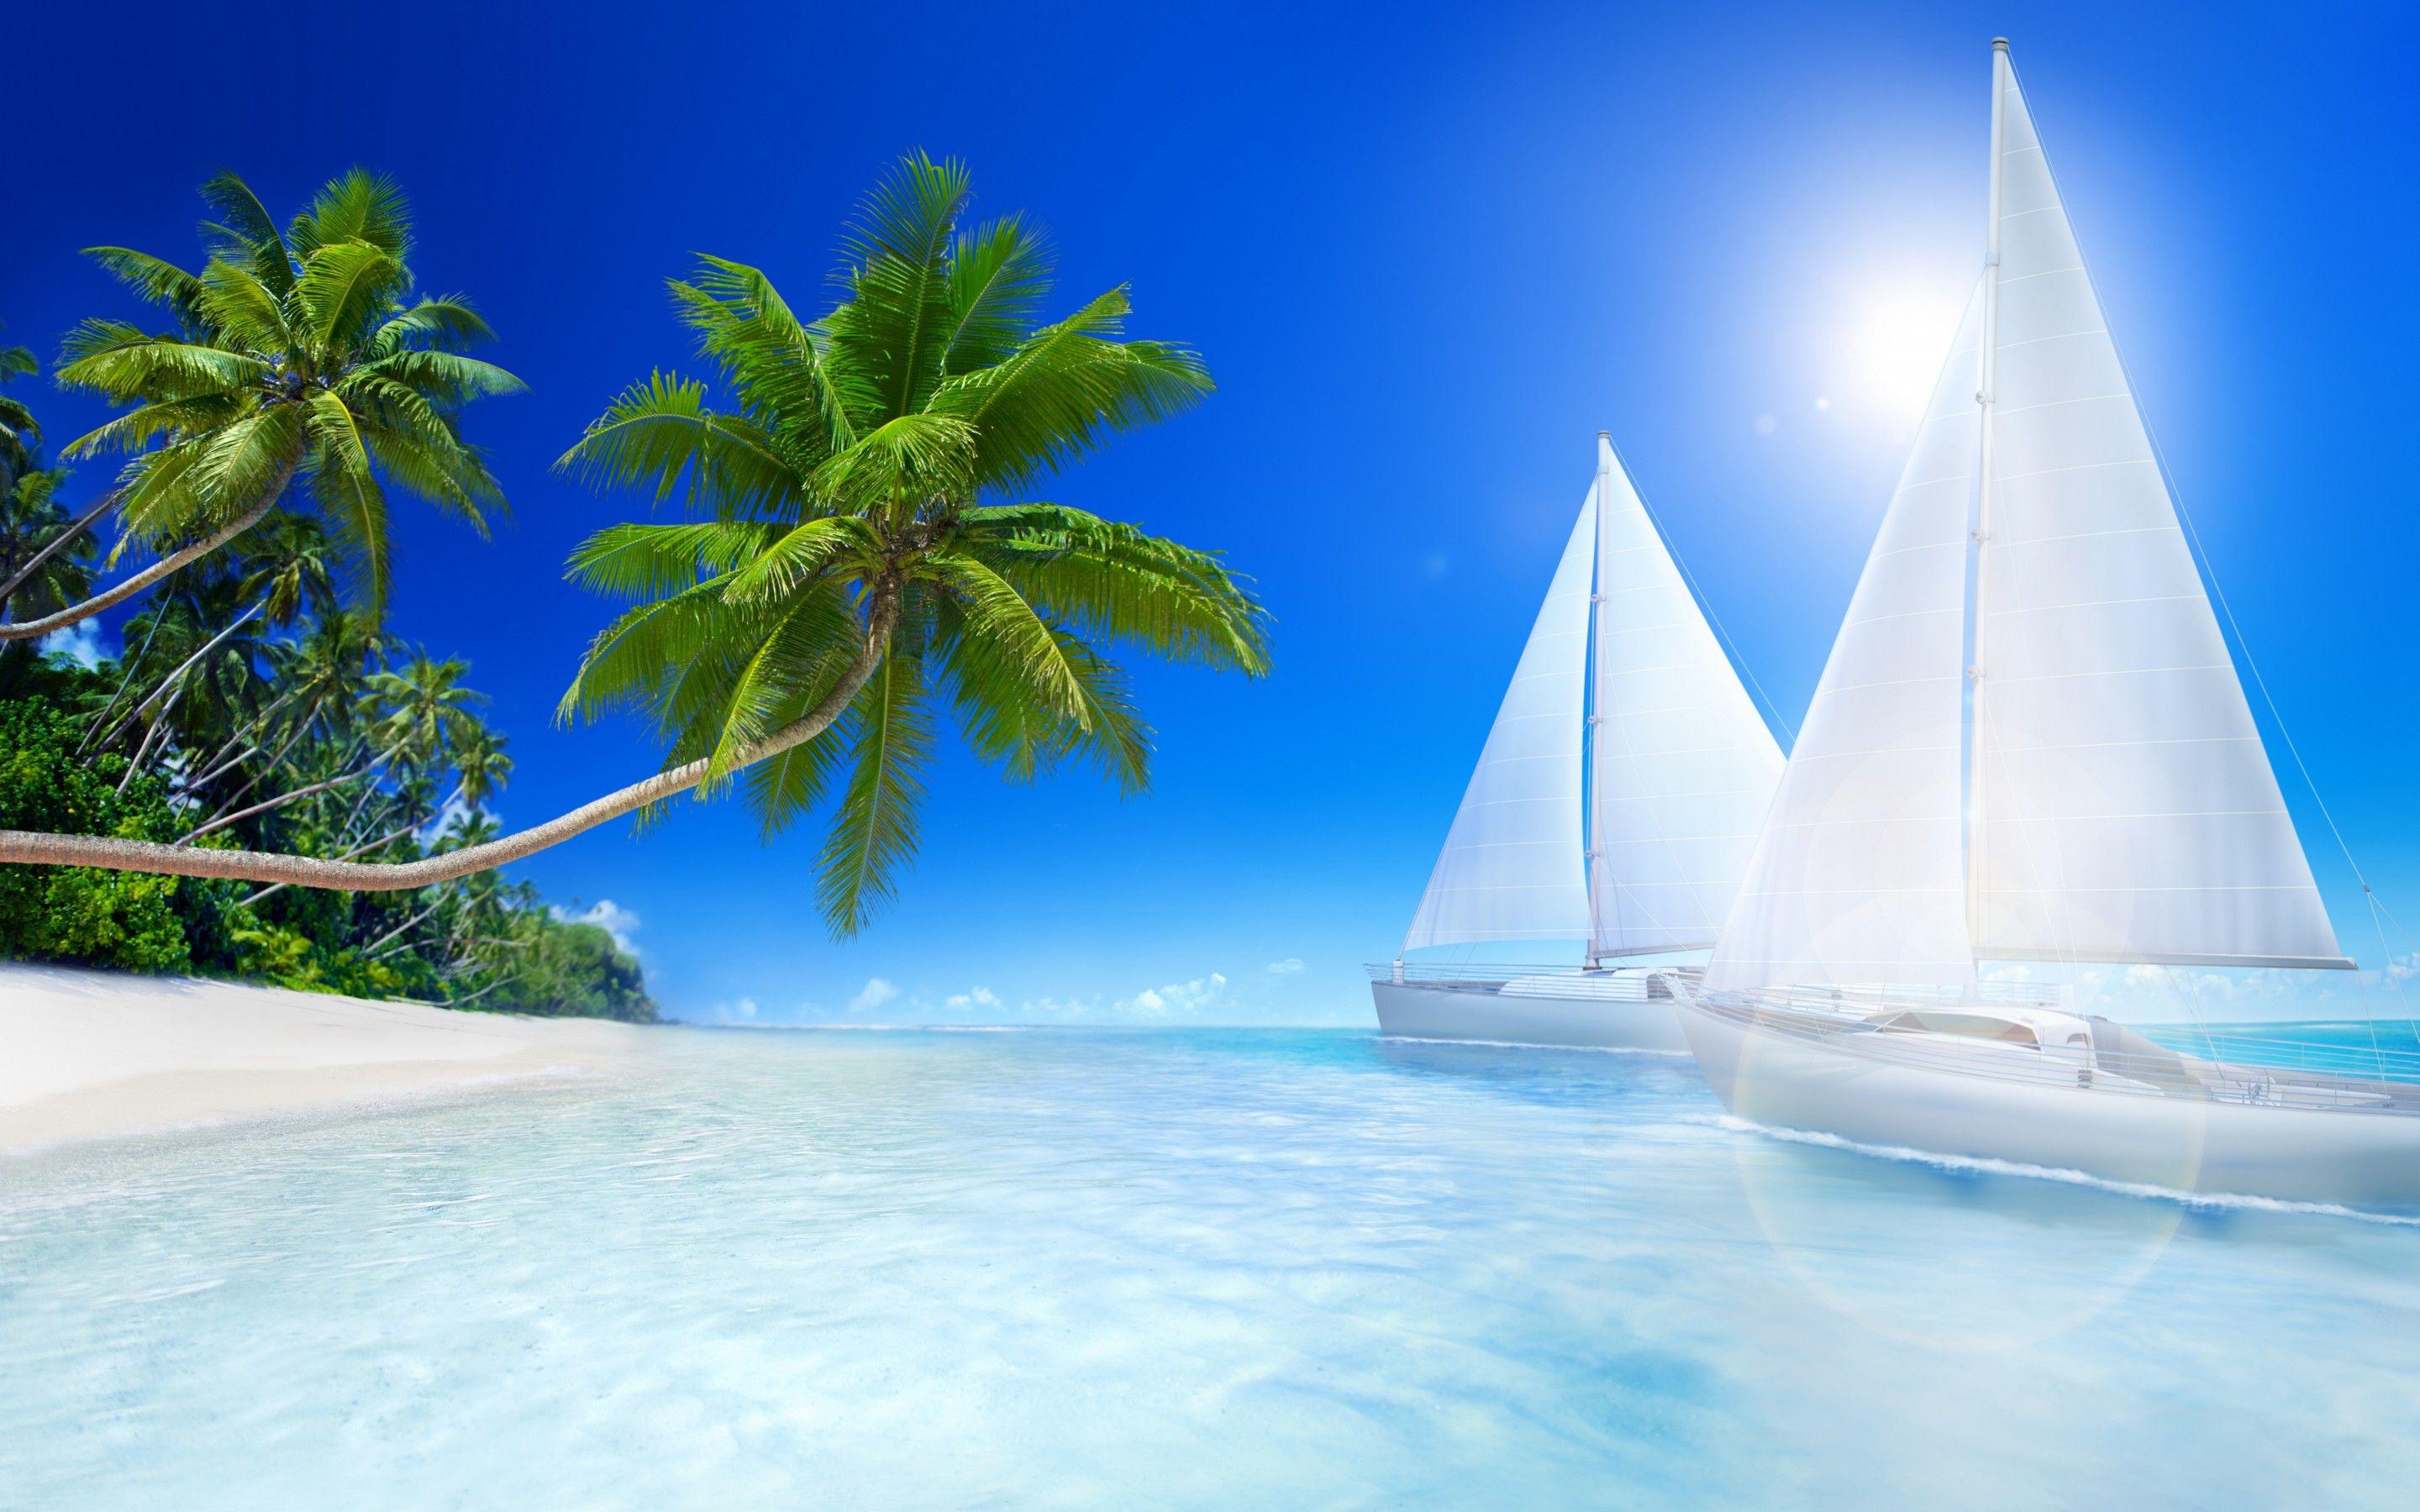 Jamaica Beach Desktop Wallpapers Top Free Jamaica Beach Desktop Backgrounds Wallpaperaccess